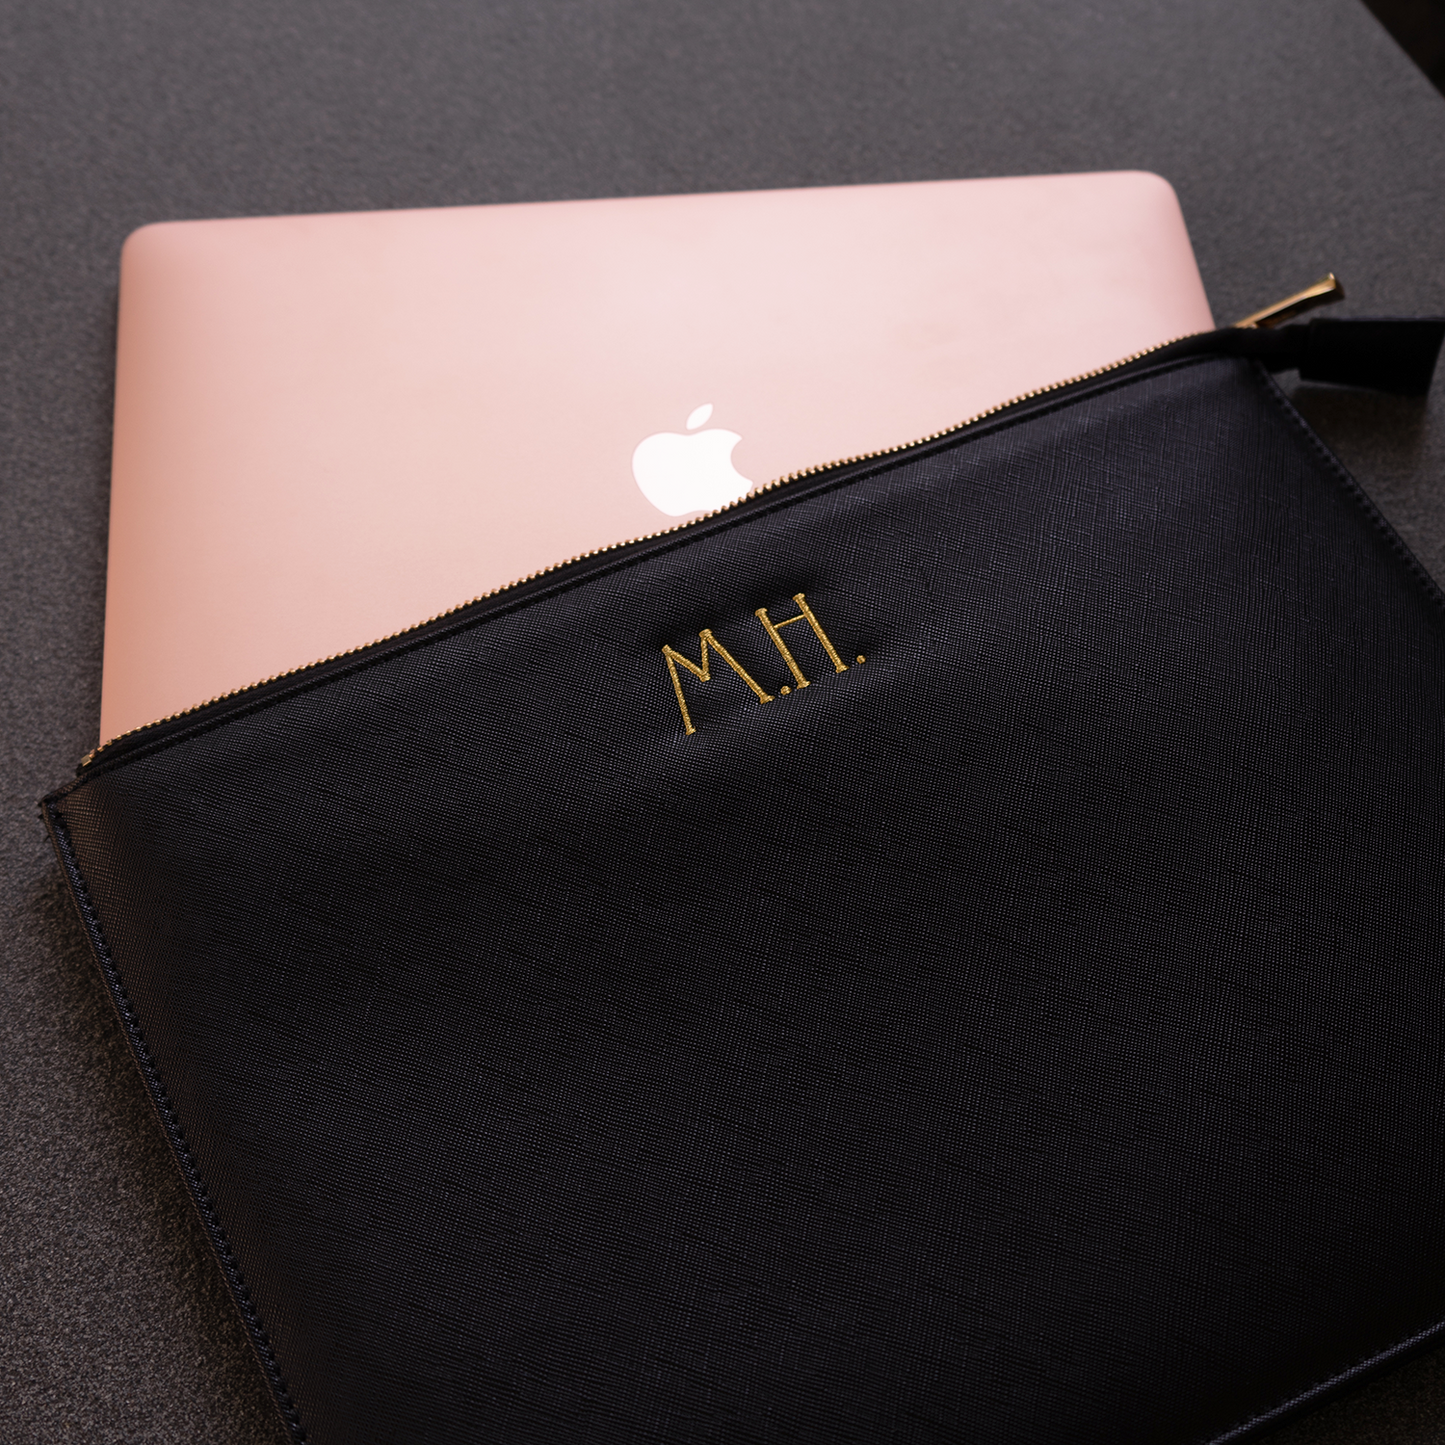 Laptop bag - Black/Gold